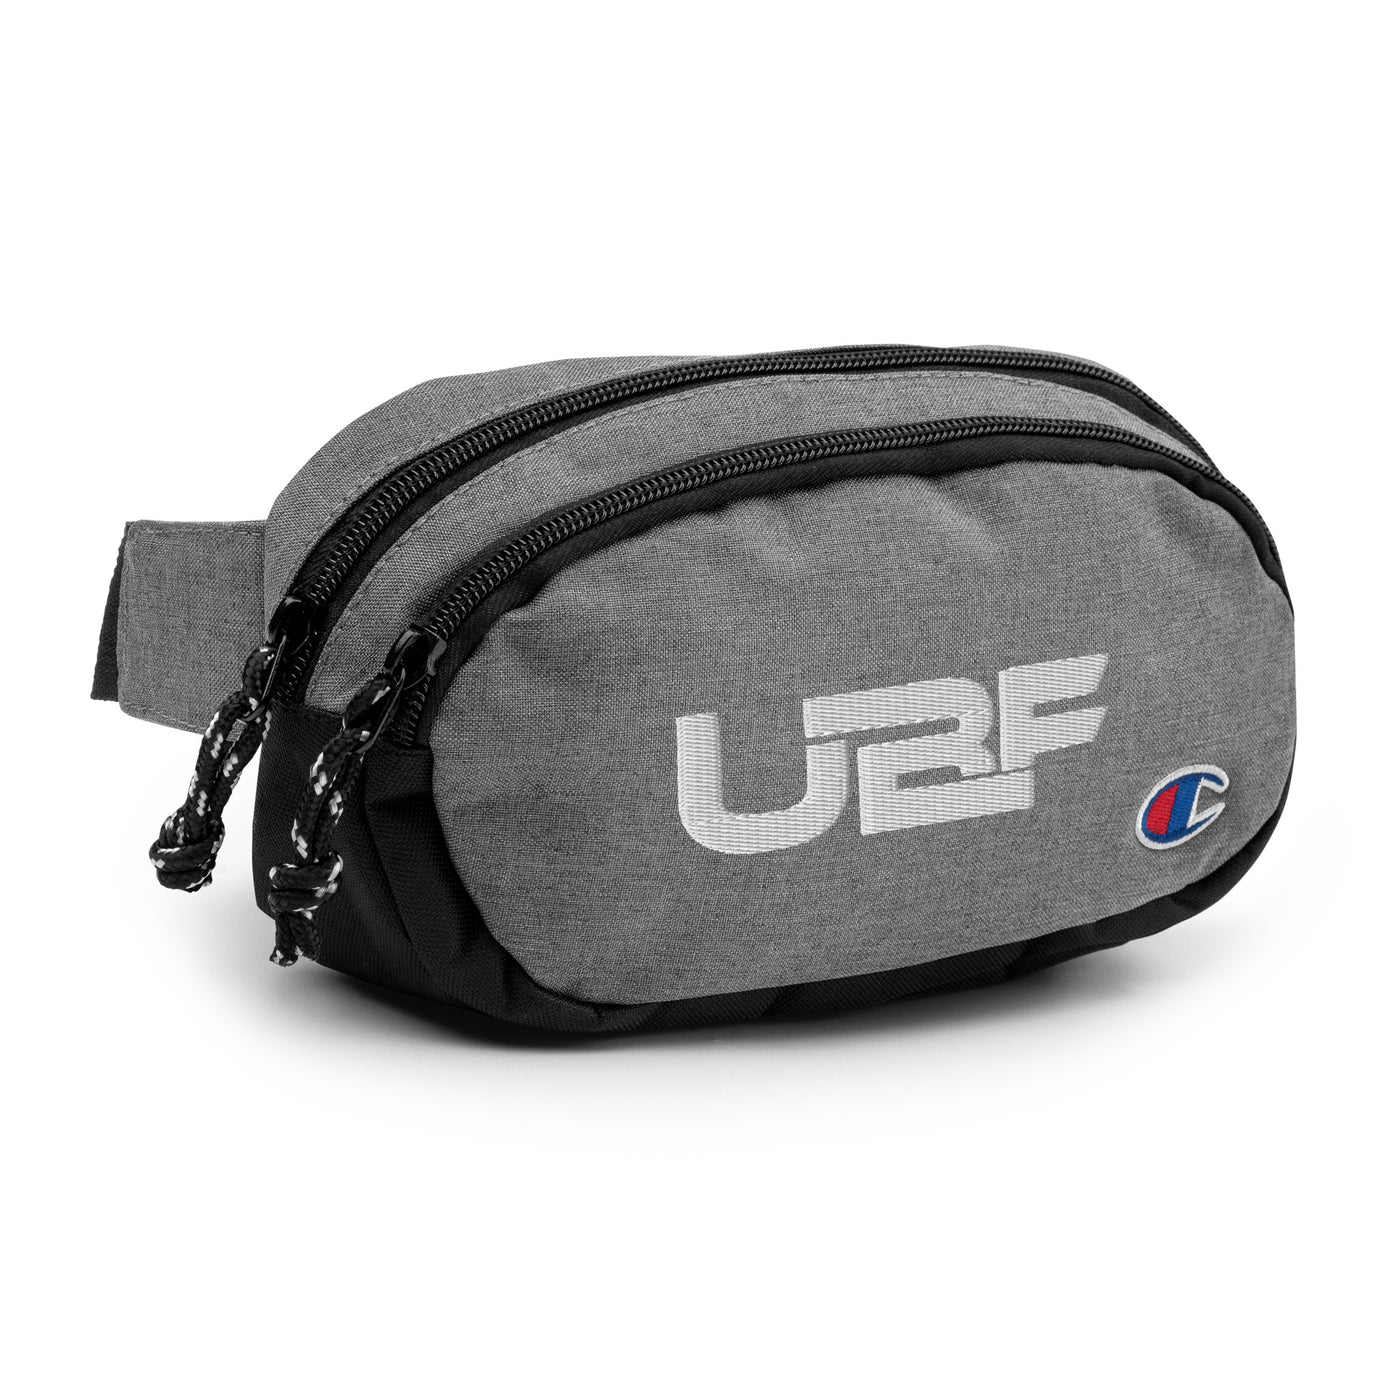 White UBF Champion fanny pack